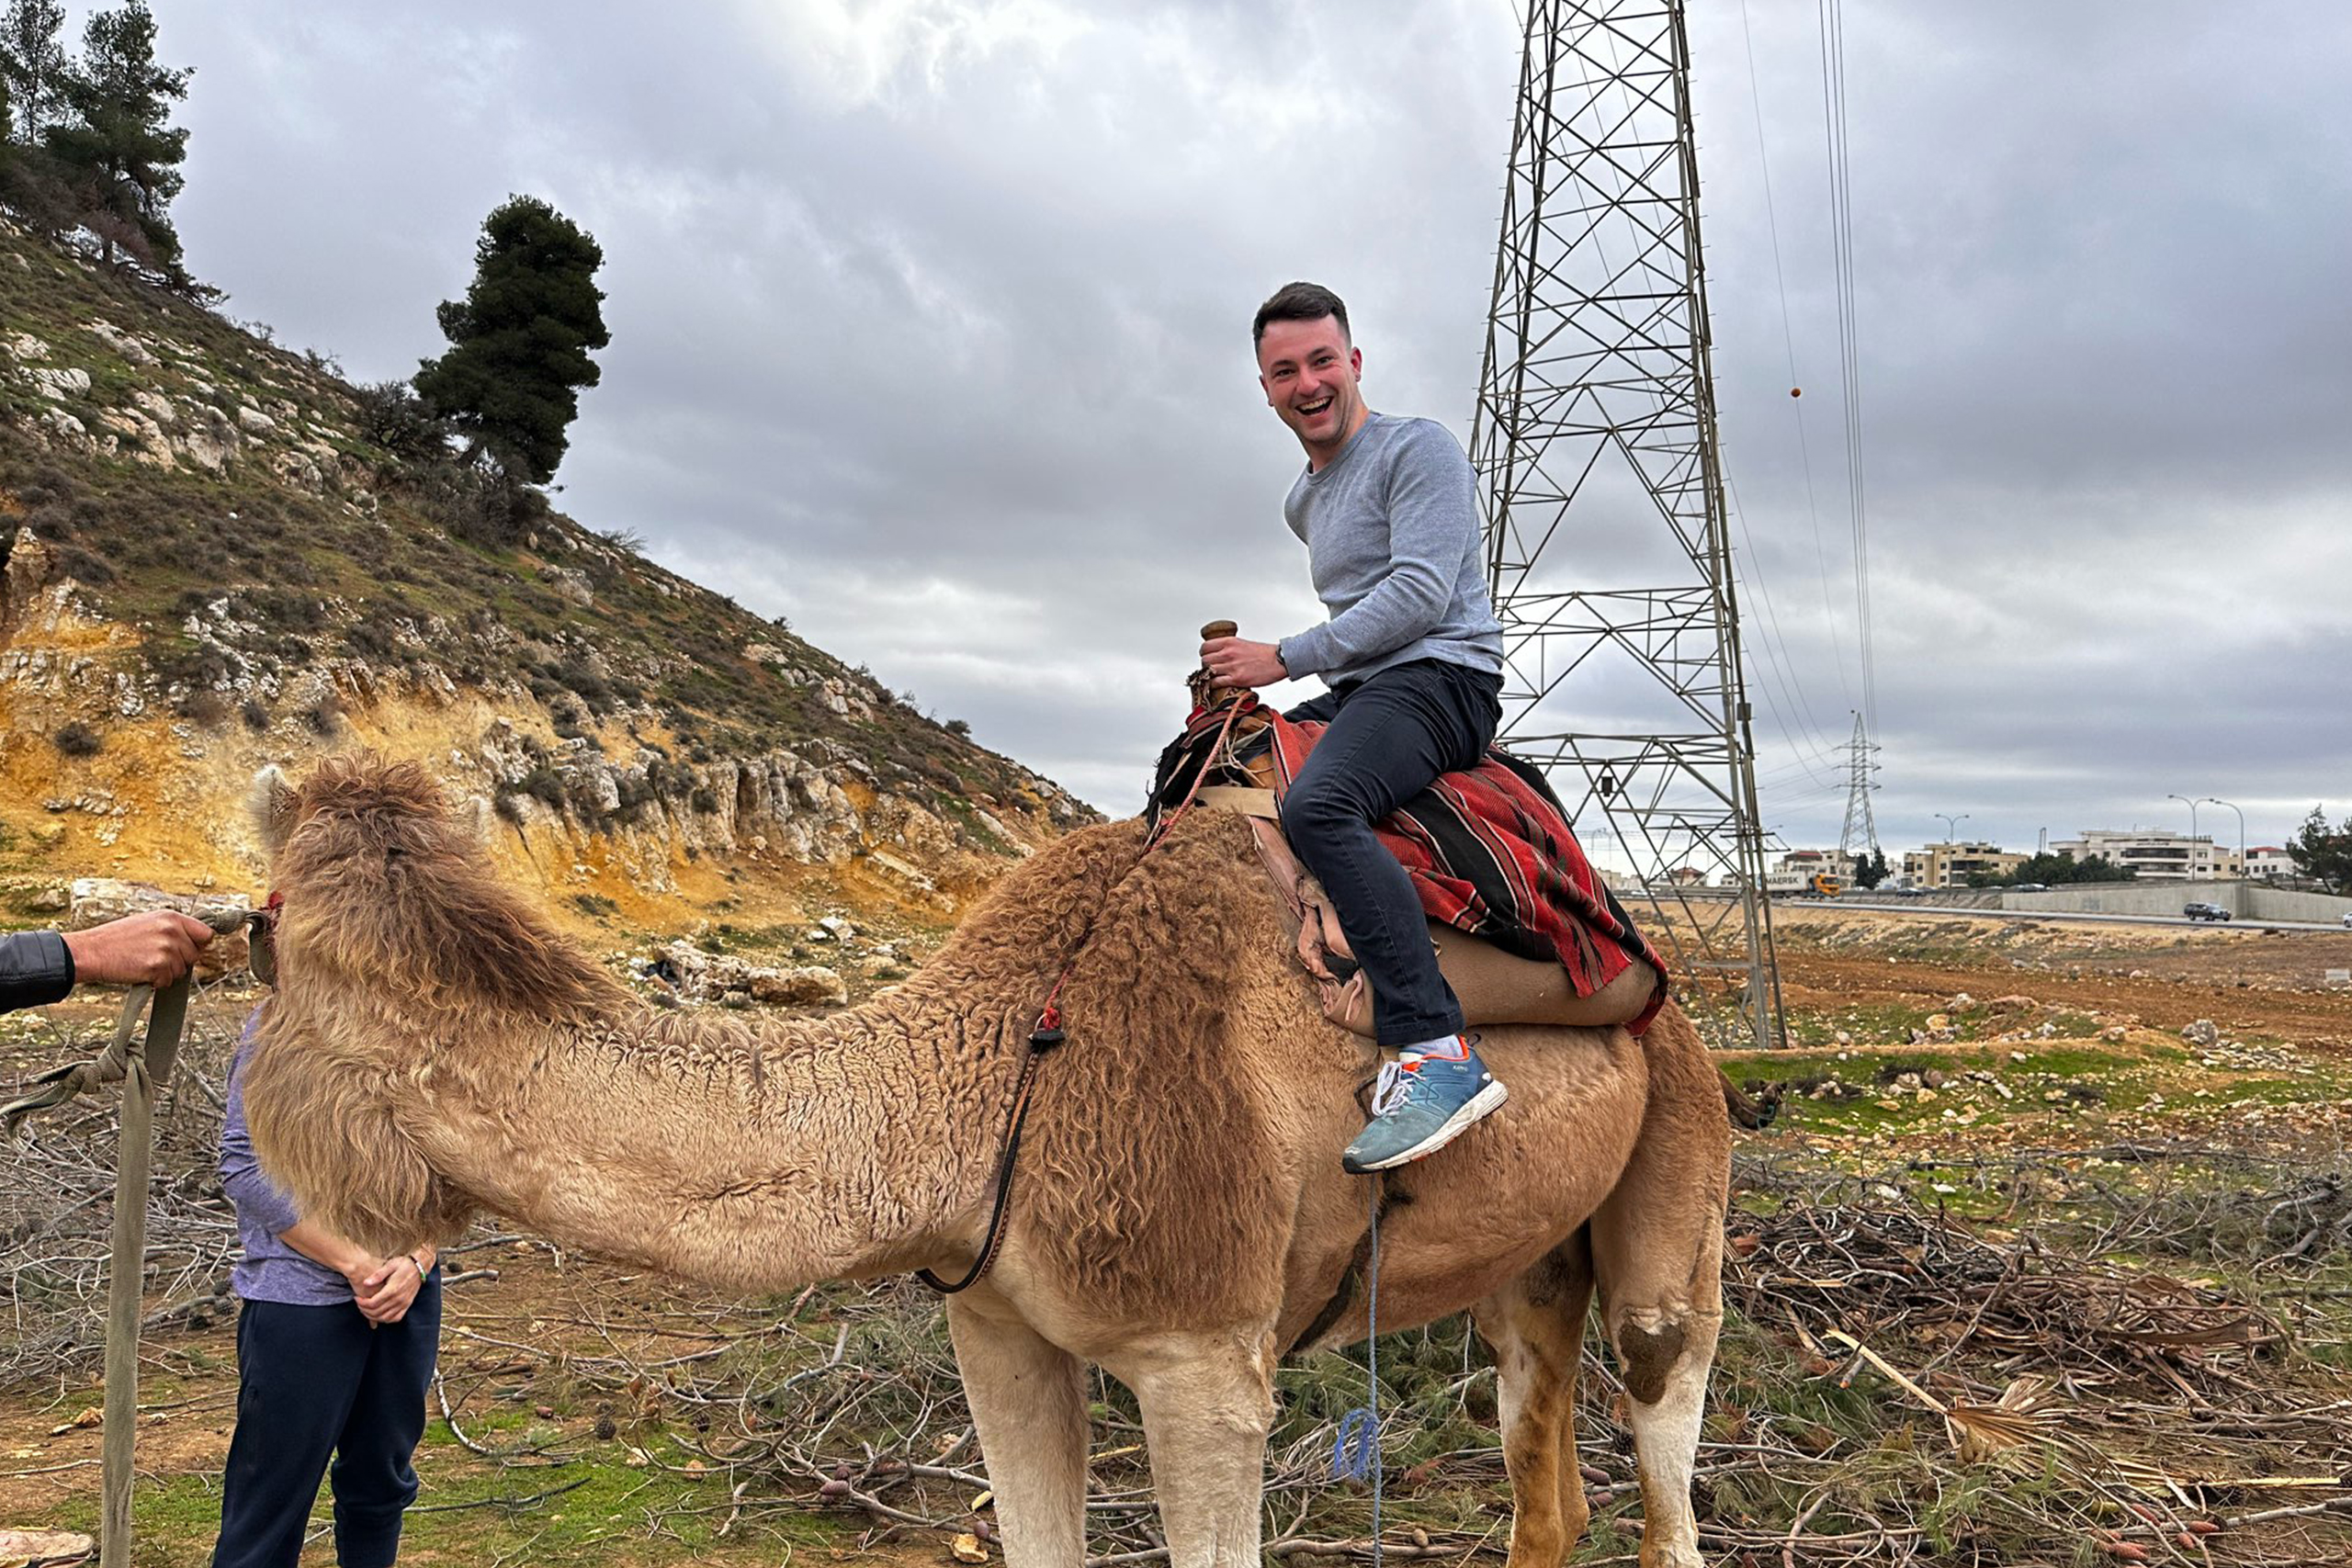 Goggins sits on a camel on a roadside in Jordan.